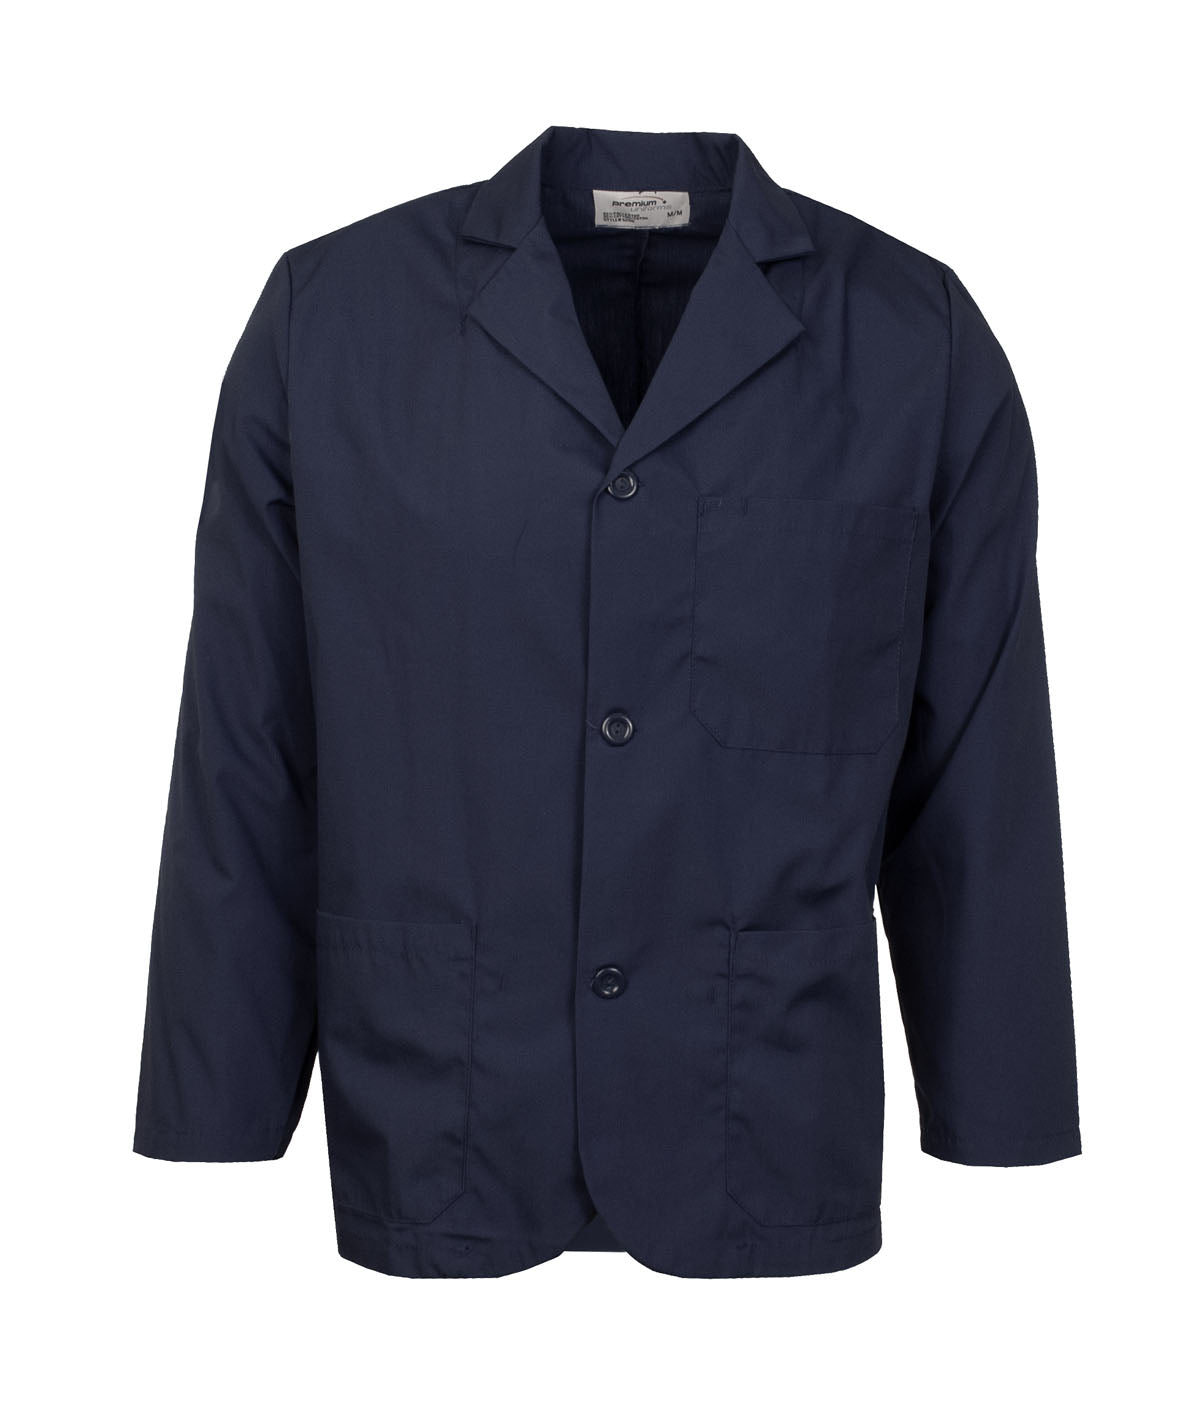 Sarrau de travail industriel Premium Uniforms #5250 marine